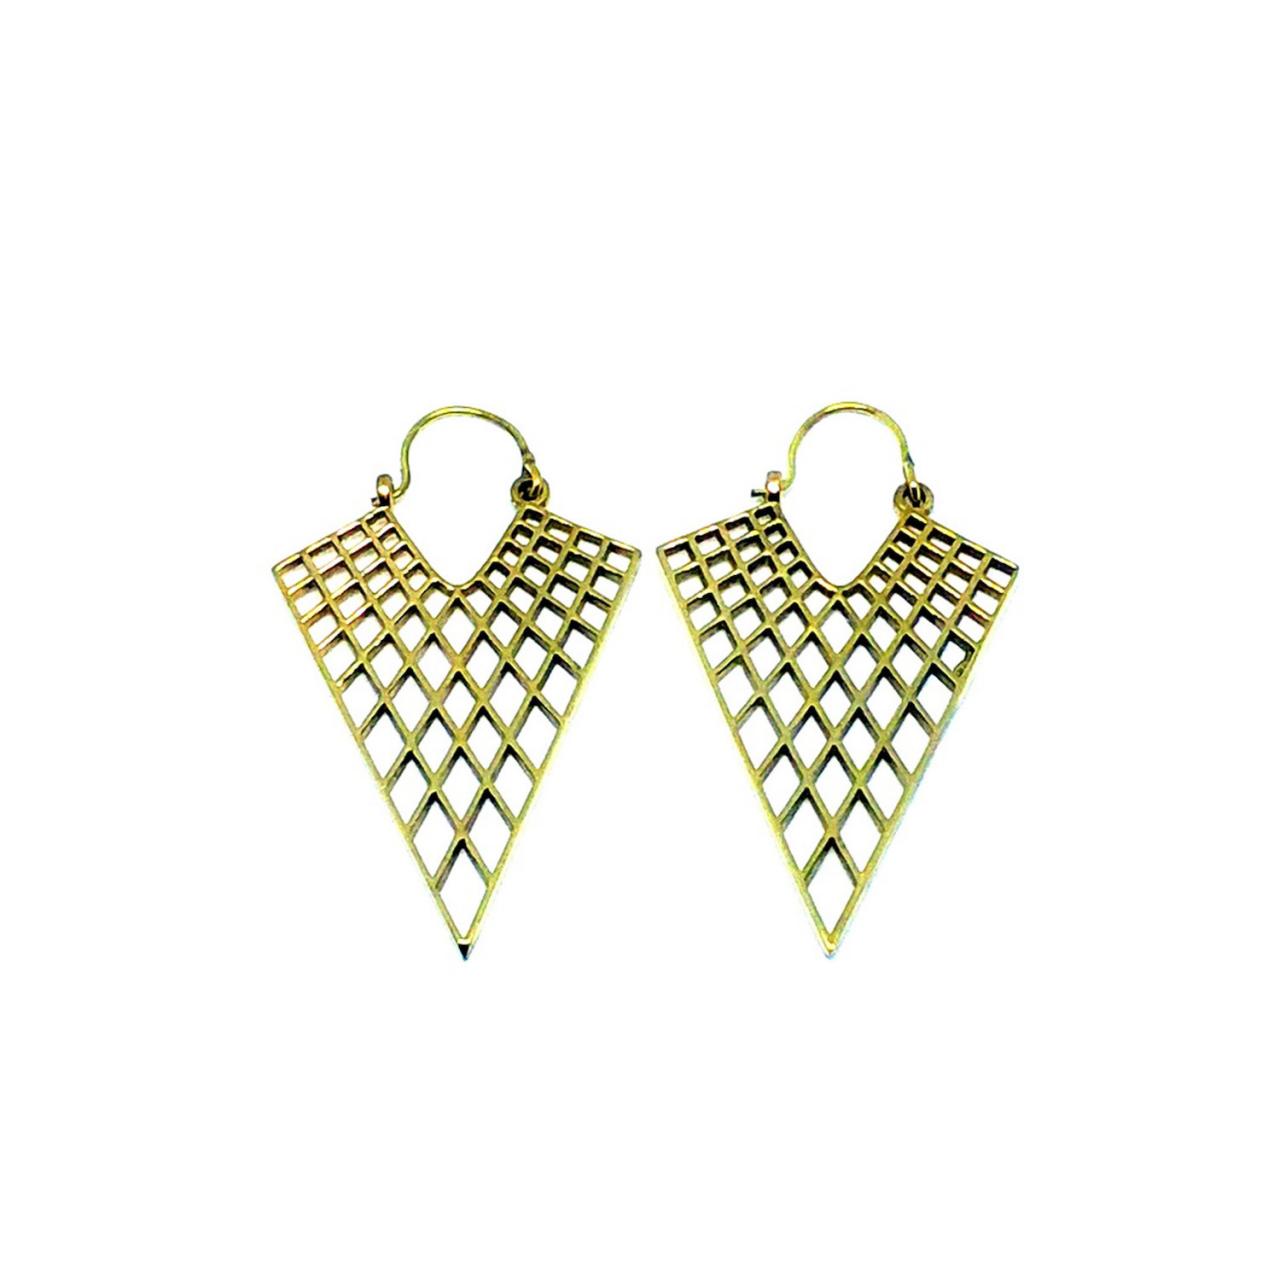 Honeycomb Triangle Earrings / Gold Dangle Earrings / Geometric Filigree Earrings / Boho Festival Jewelry / Hammered Handmade Brass Earrings